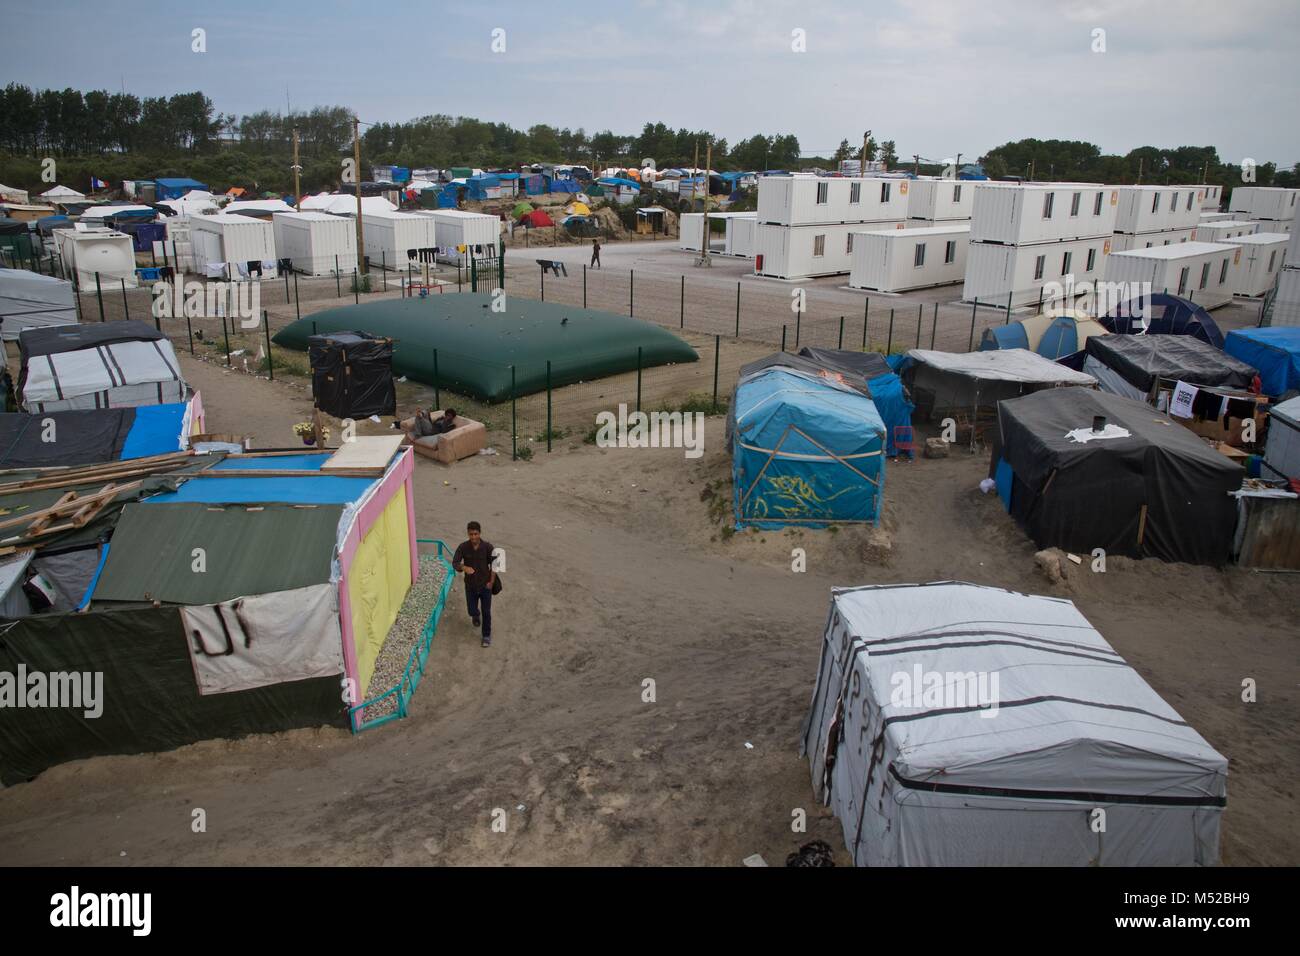 magi Hyret Chaiselong Calais Refugee Camp Banque d'image et photos - Alamy